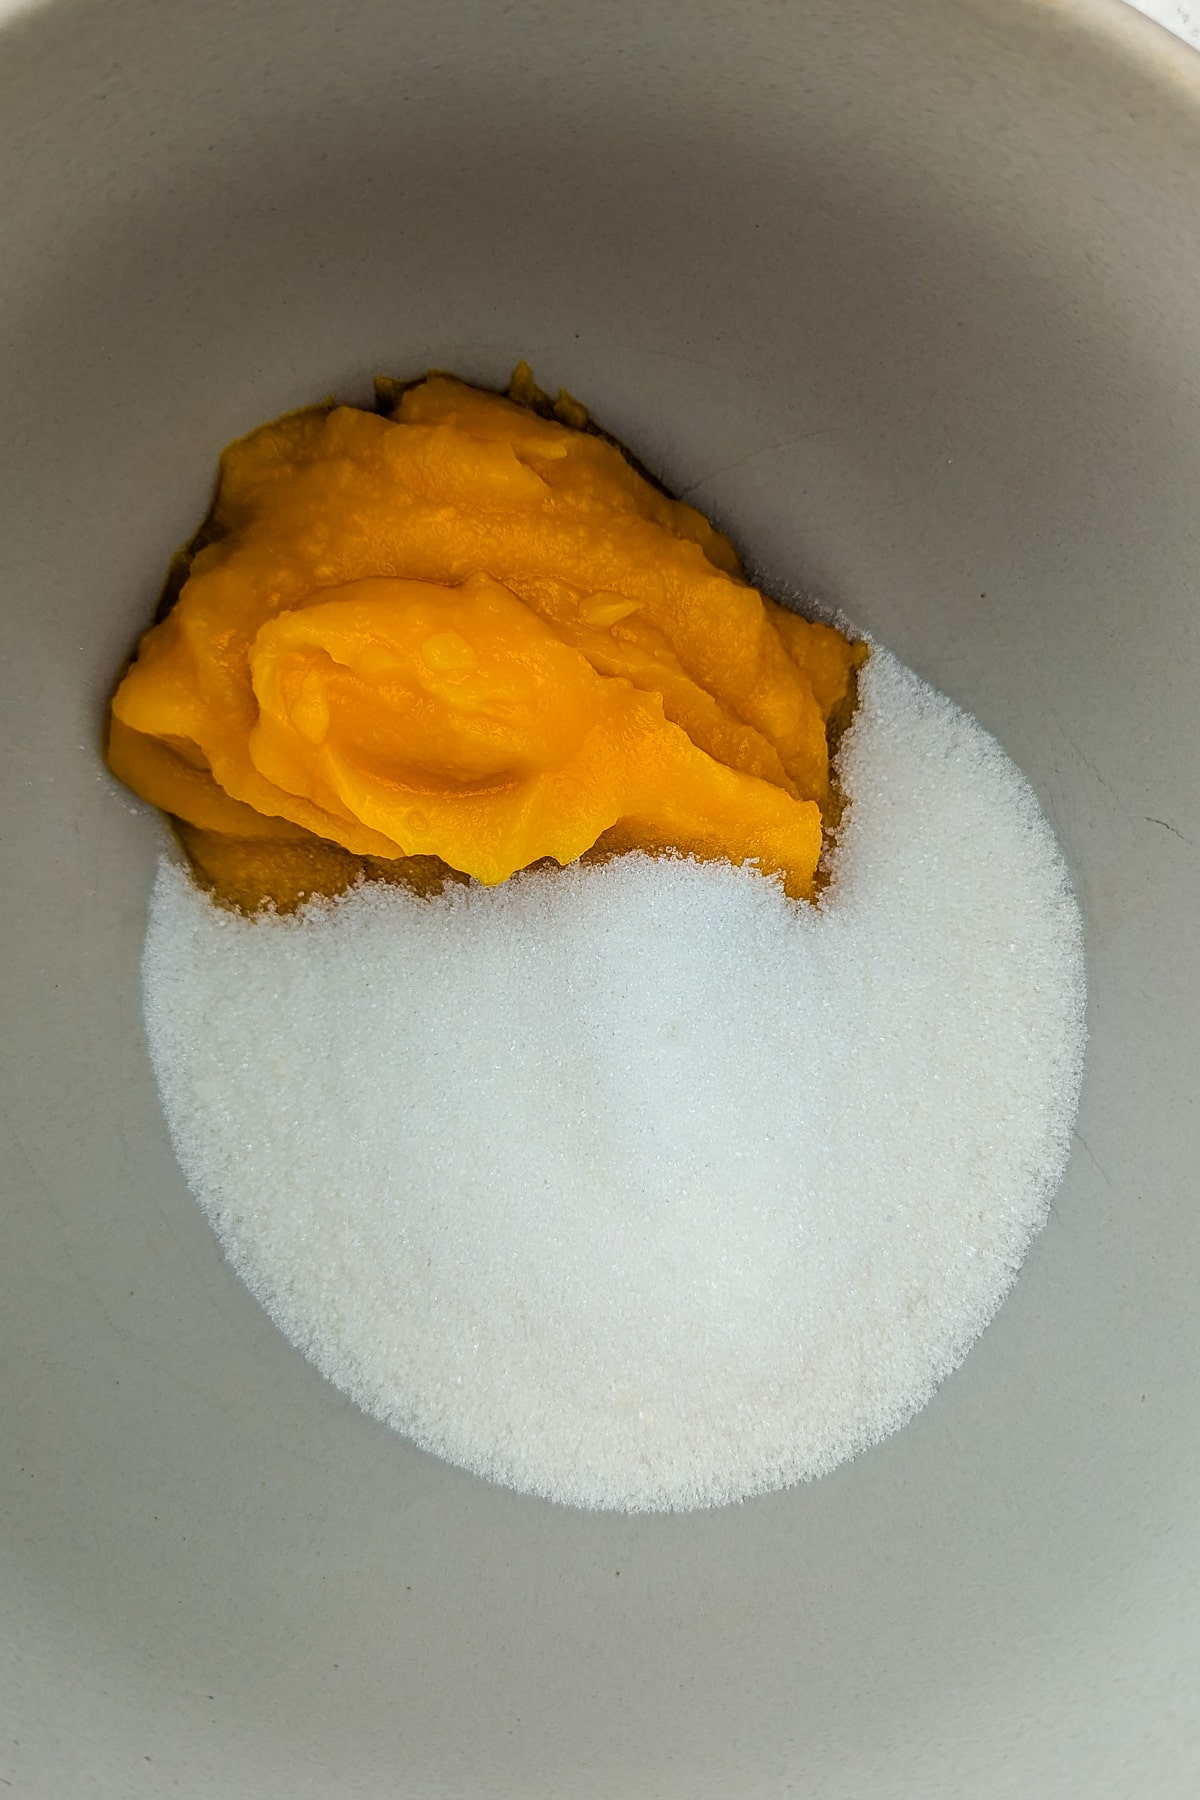 Sugar and pumpkin puree in a large bowl.